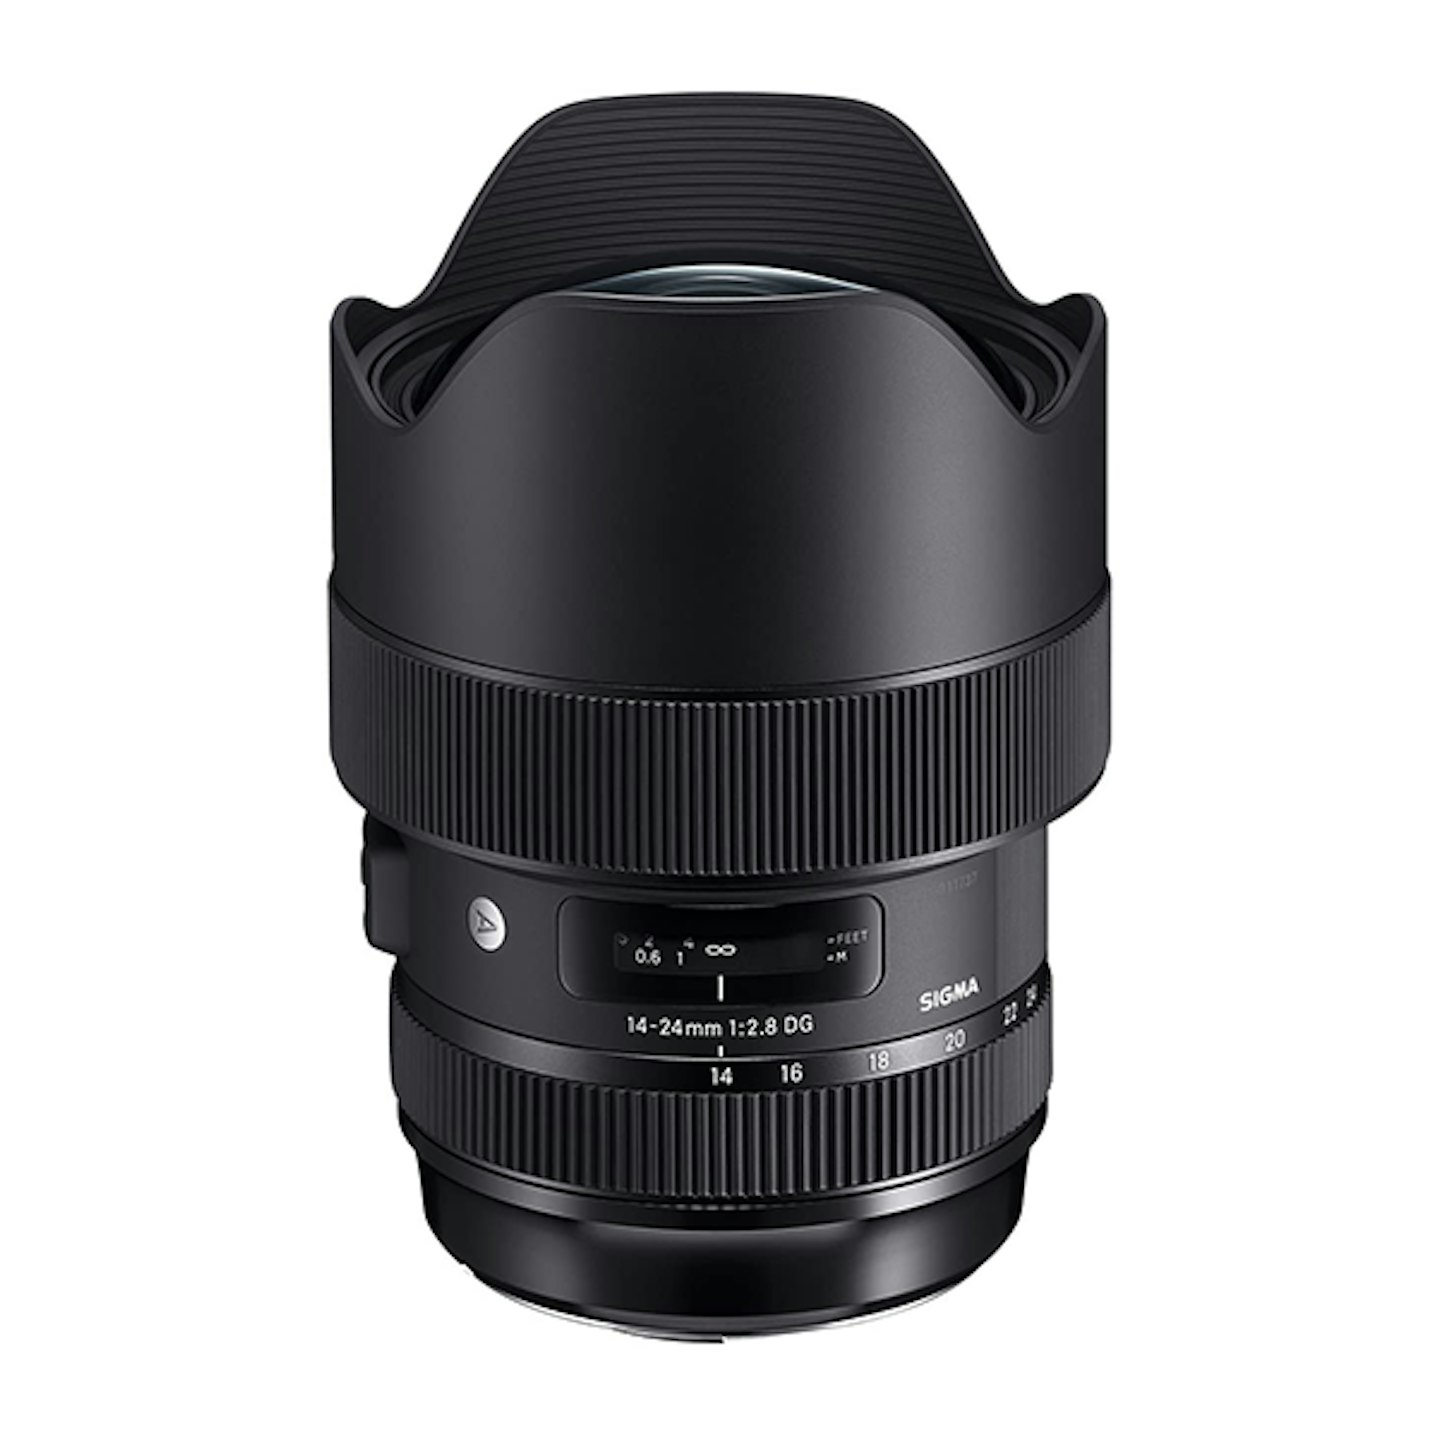 Sigma 212954 14-24mm F2.8 DG HSM Art Lens for Canon